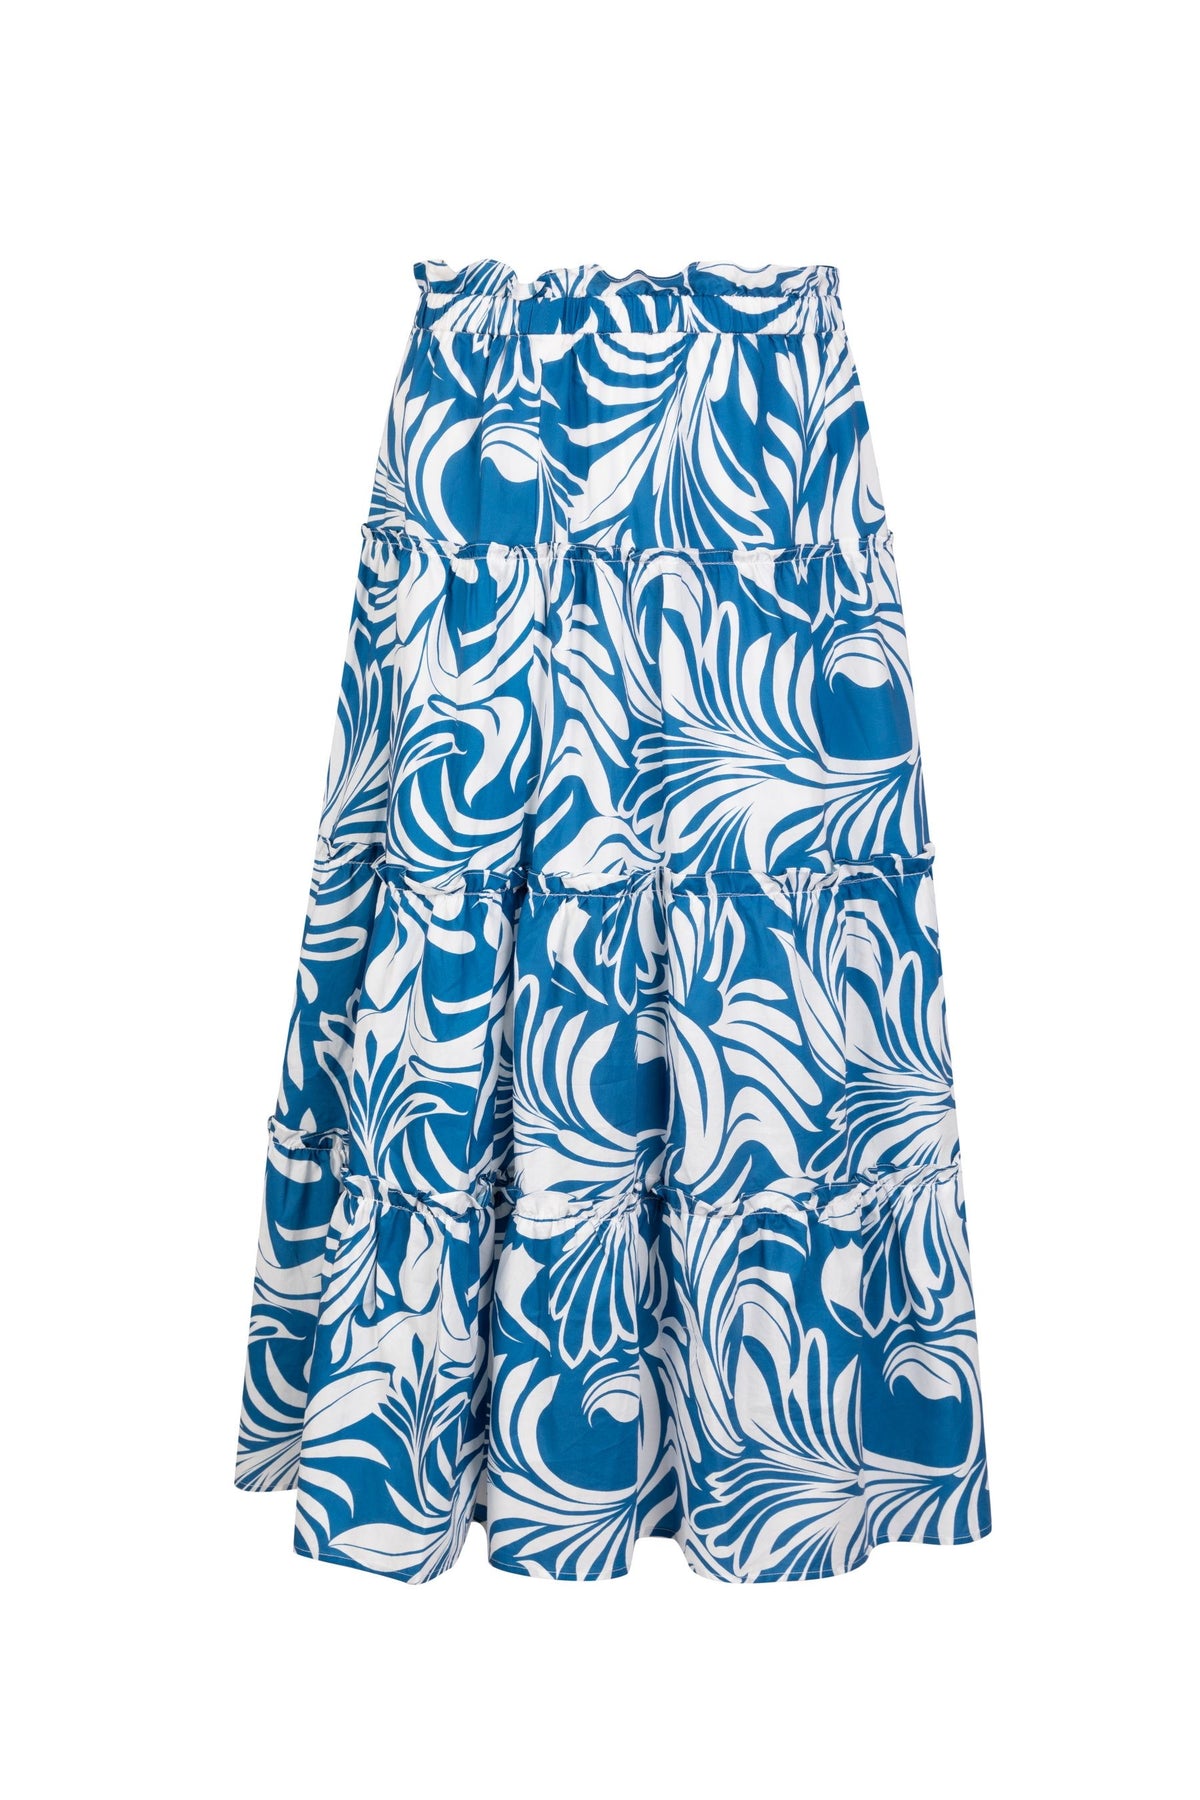 Fabian a cotton print skirt - blue & white